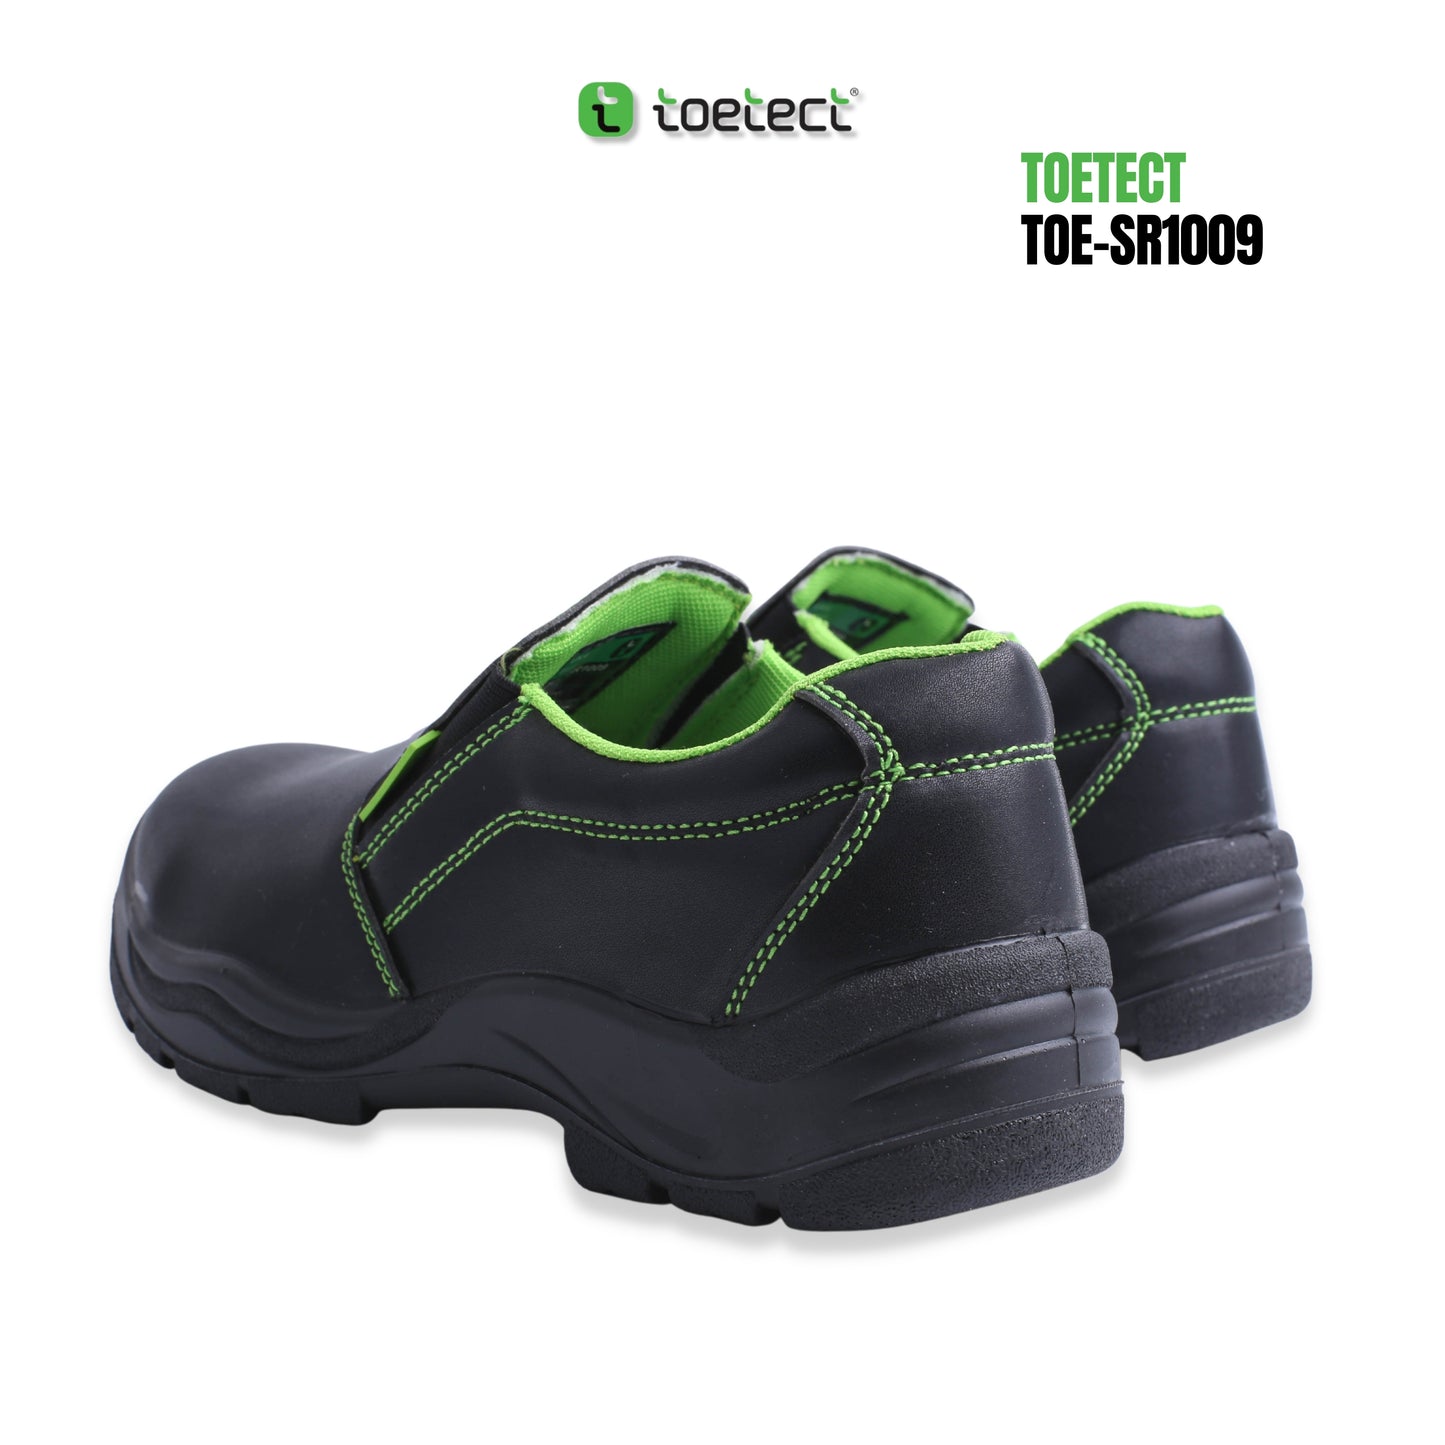 ToeTect TOE-SR1009 Men Low Cut Slip-on Safety Boots